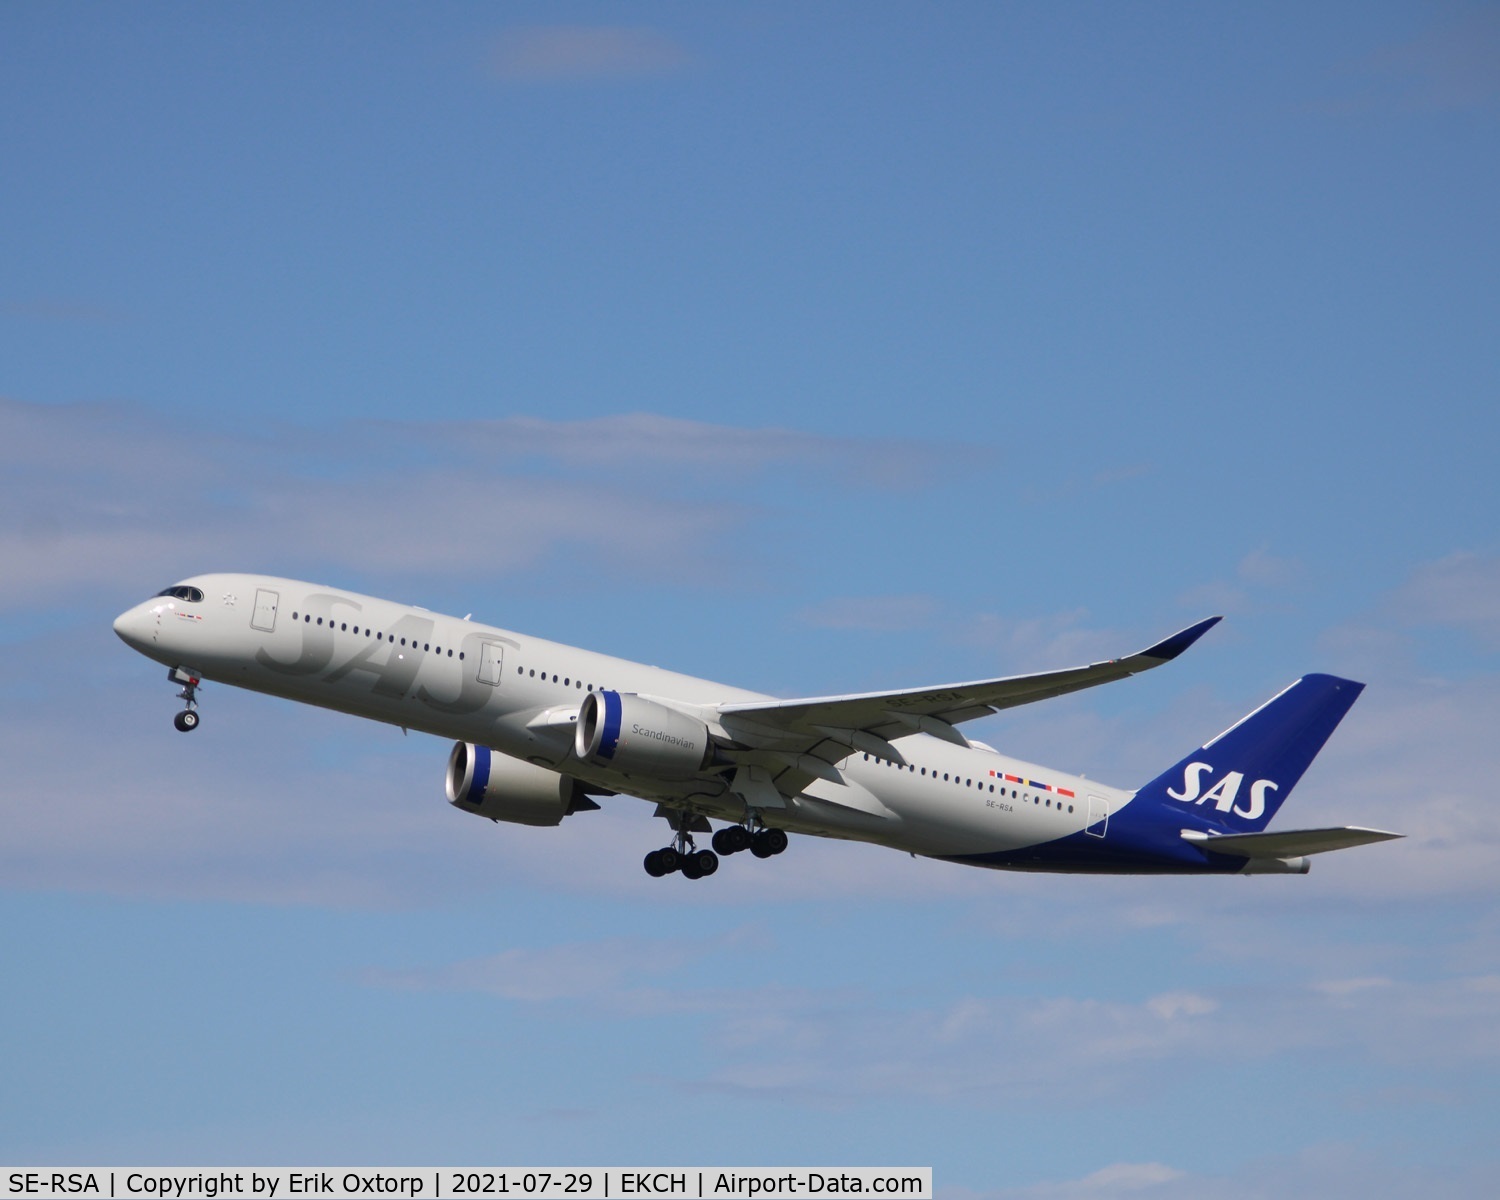 SE-RSA, 2019 Airbus A350-941 C/N 358, SE-RSA taking off rw 22R